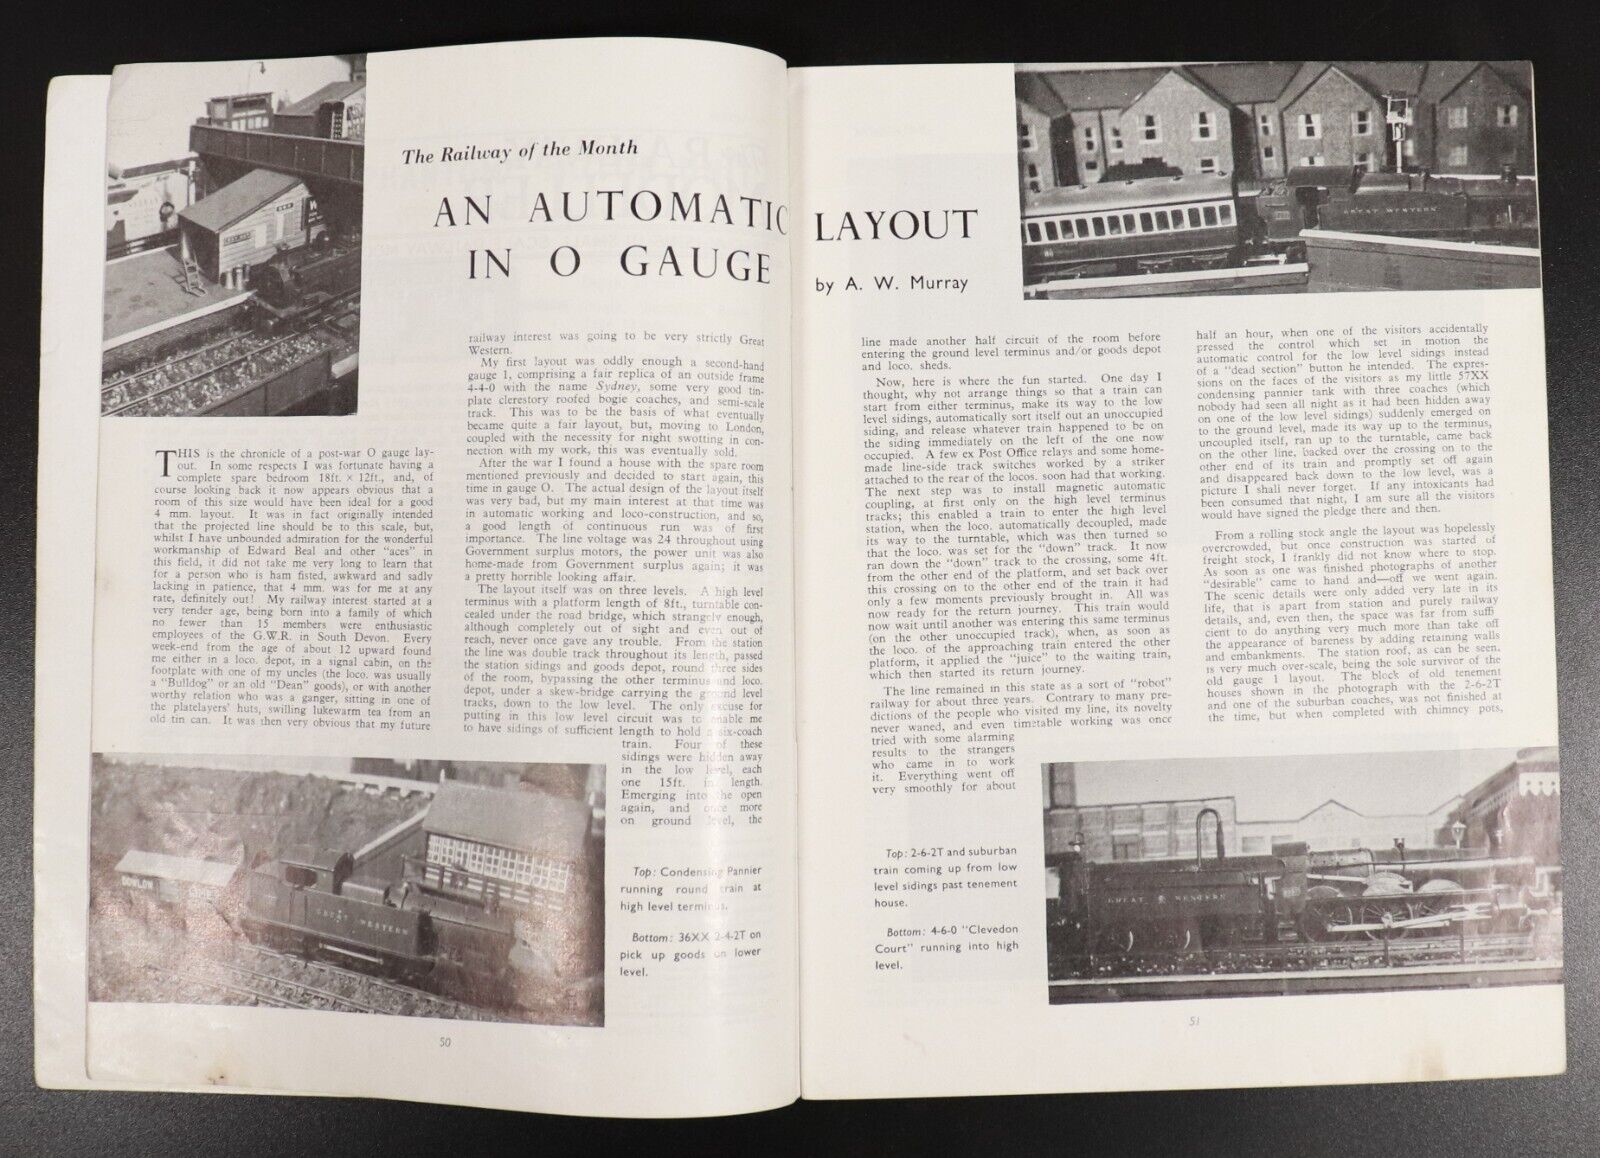 c1954 5vol Railway Modeller For The Average Enthusiast Magazine Railway Books